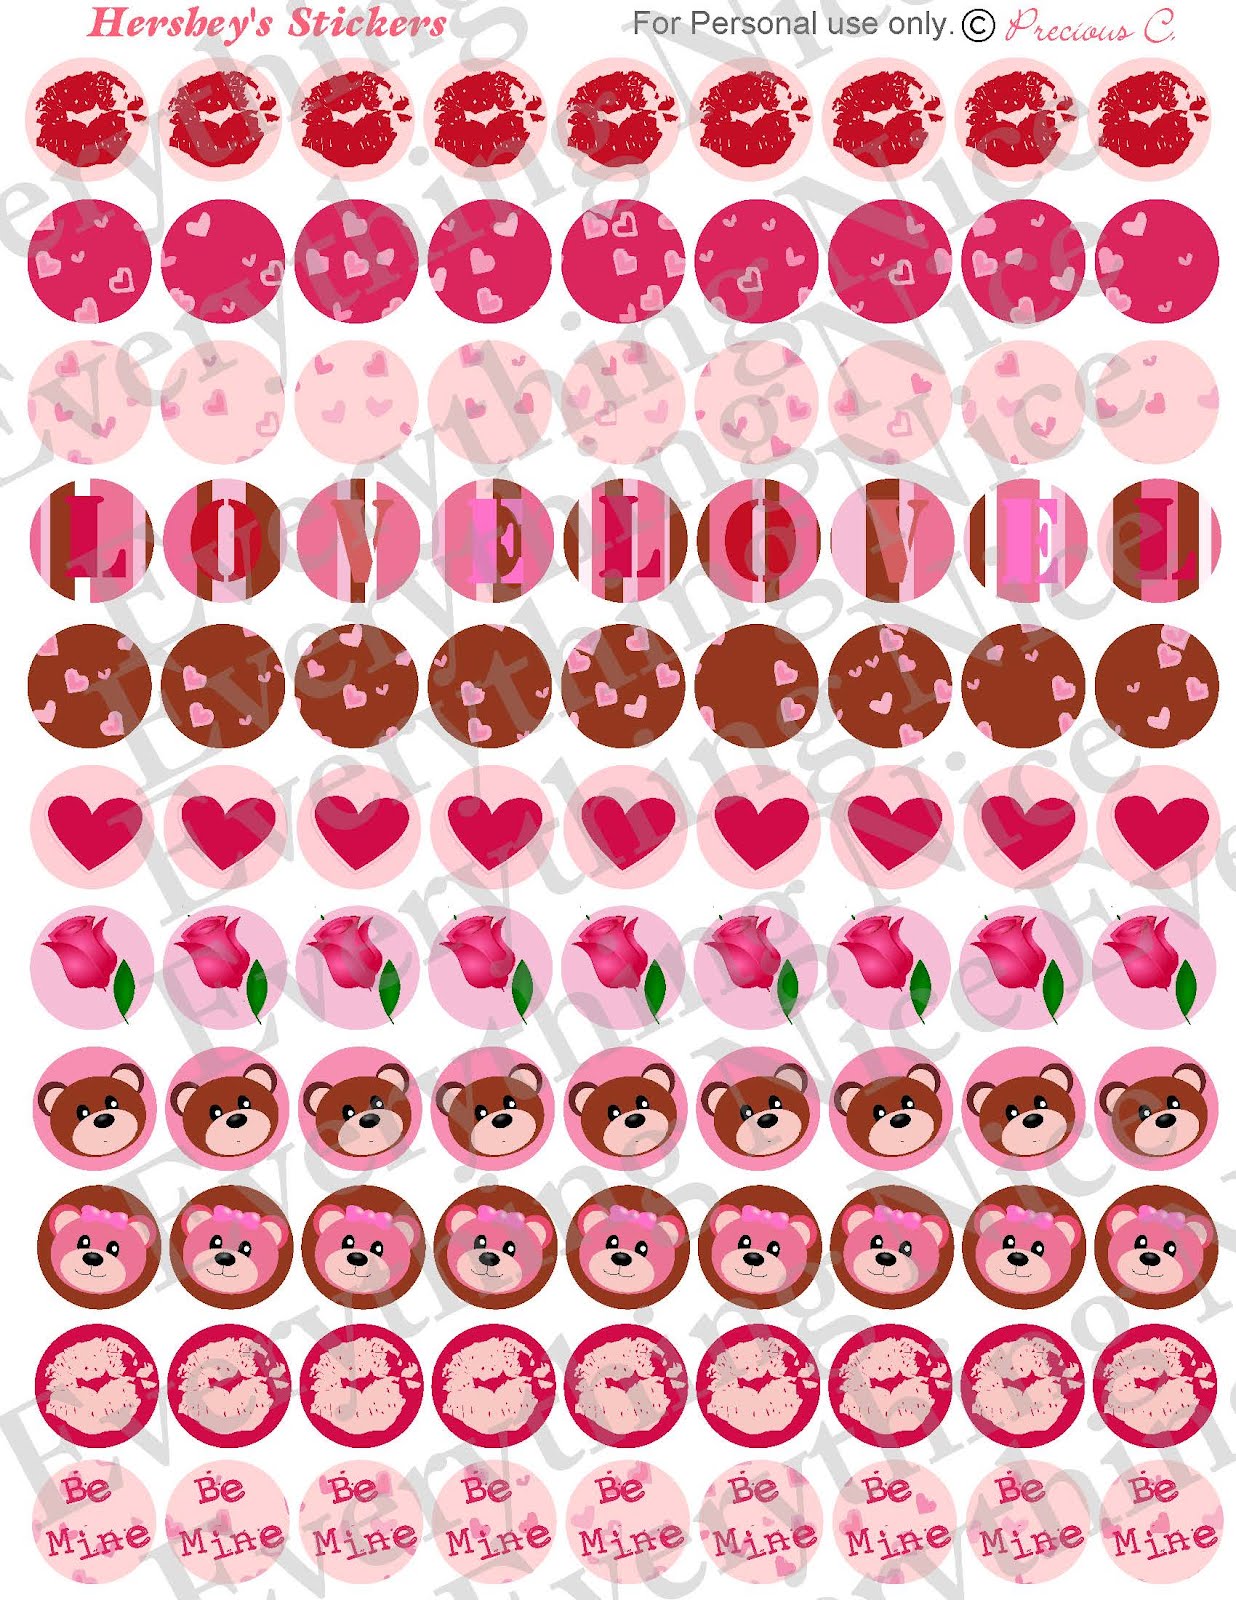 7 Best Images of Free Printable Valentine Stickers Free Printable